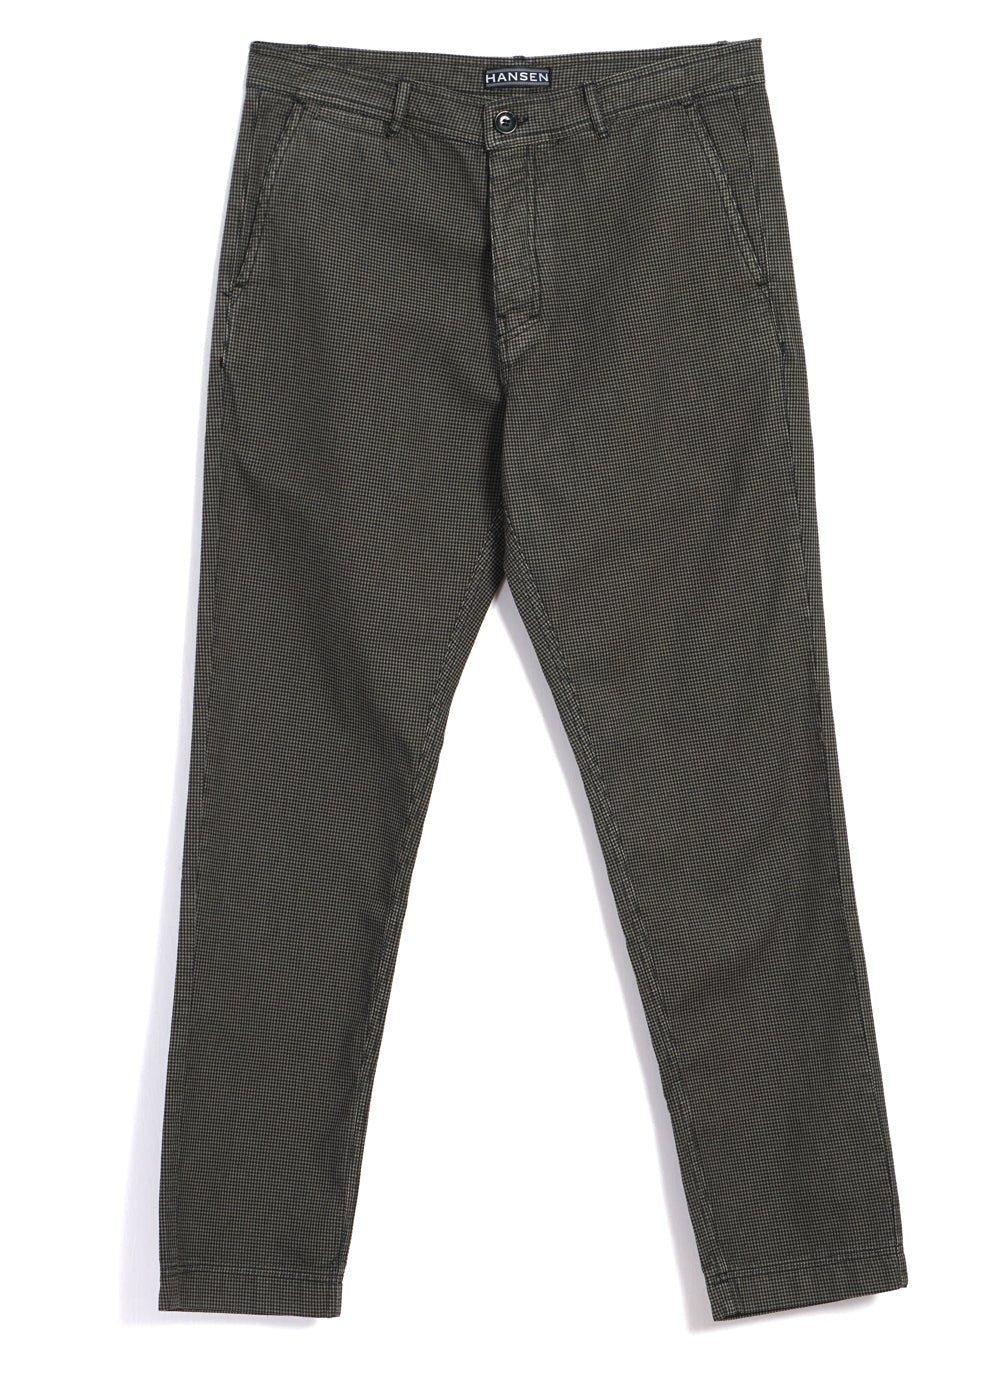 HANSEN GARMENTS - FRED | Regular Cut Work Trousers | Black Sand - HANSEN Garments